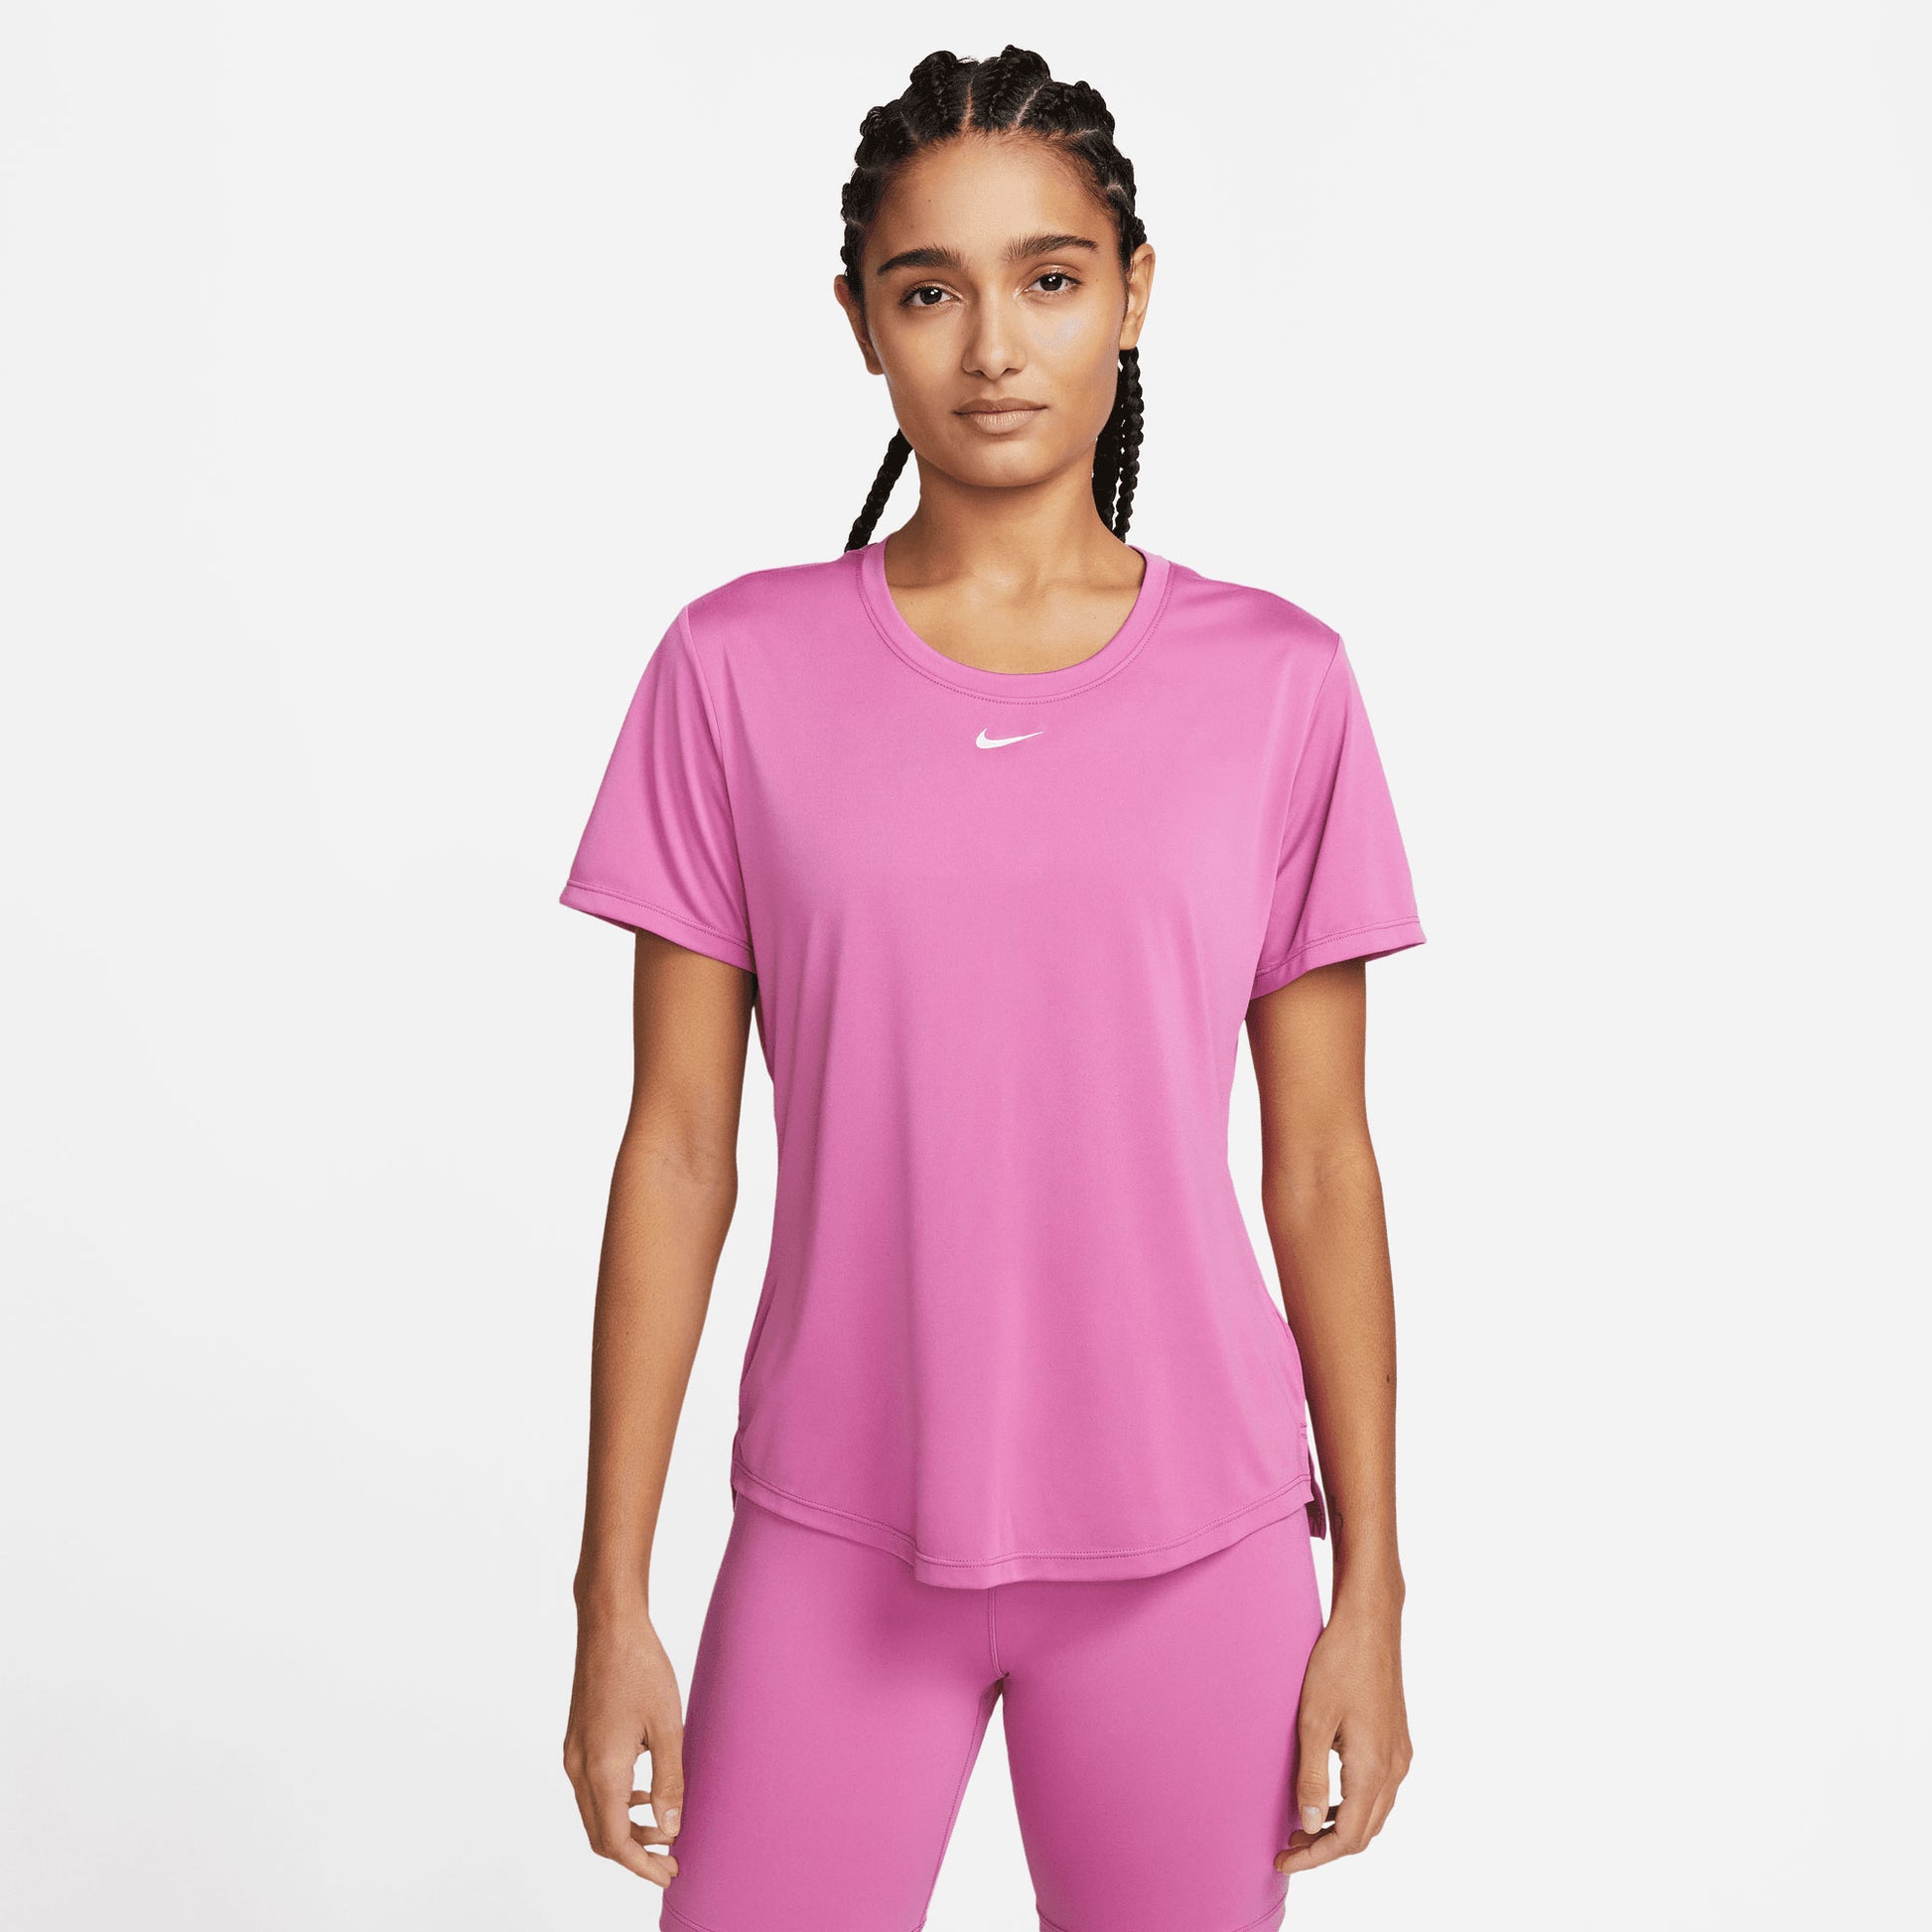 Komkommer borstel Bewusteloos Nike One Dri-FIT Dames Standaard Fit Shirt Roze - Tennis Only